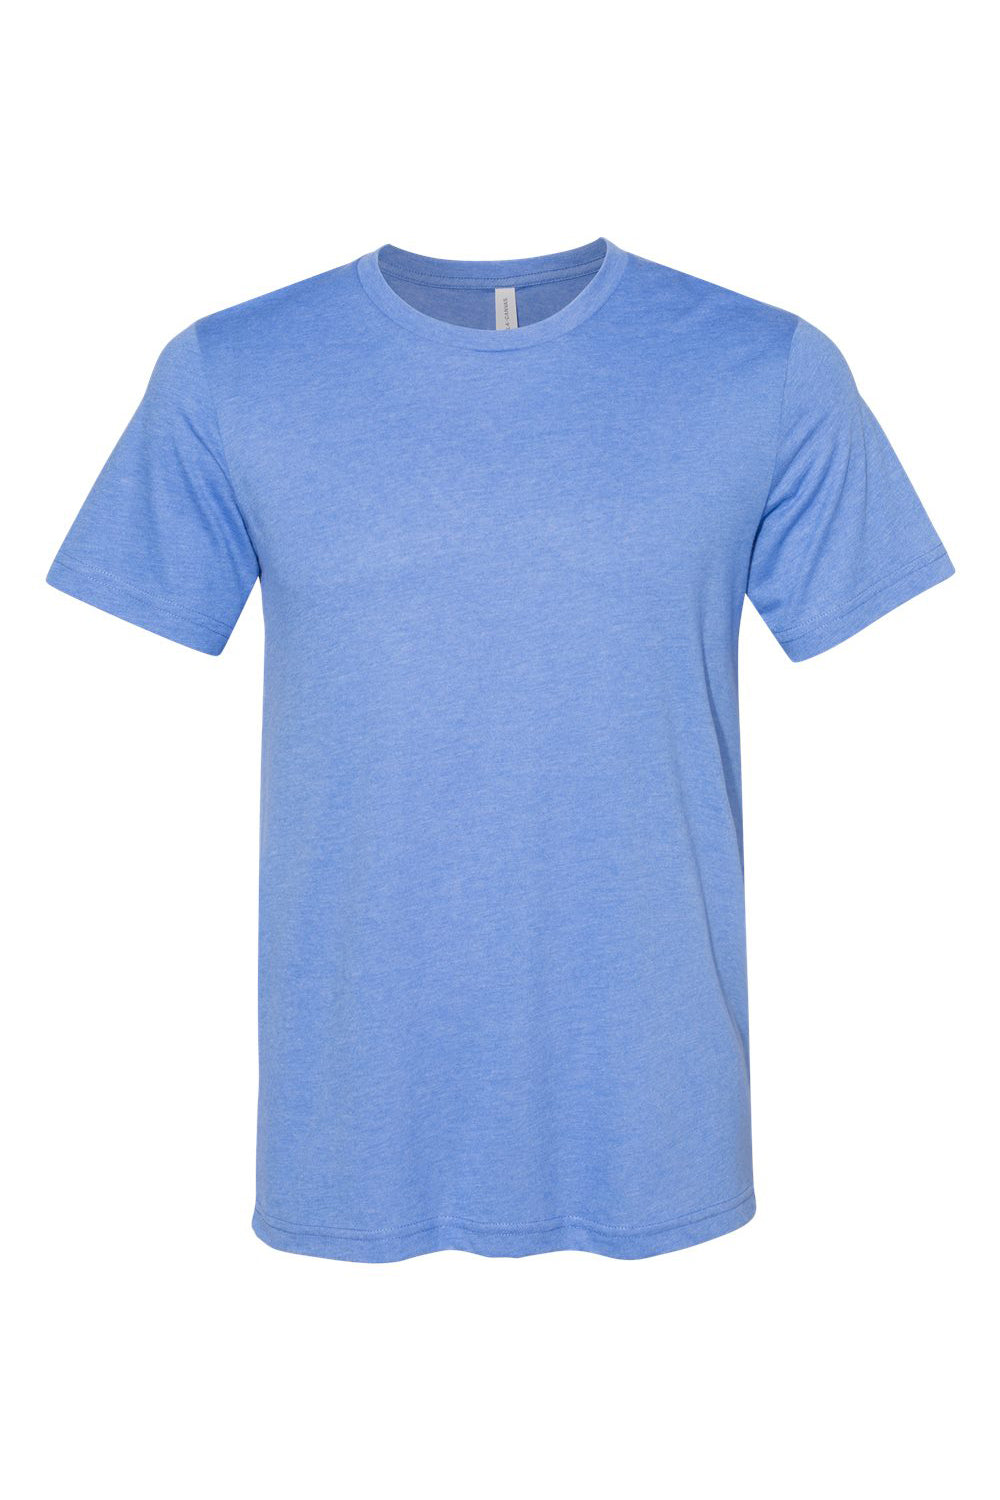 Bella + Canvas BC3301/3301C/3301 Mens Jersey Short Sleeve Crewneck T-Shirt Heather Columbia Blue Flat Front